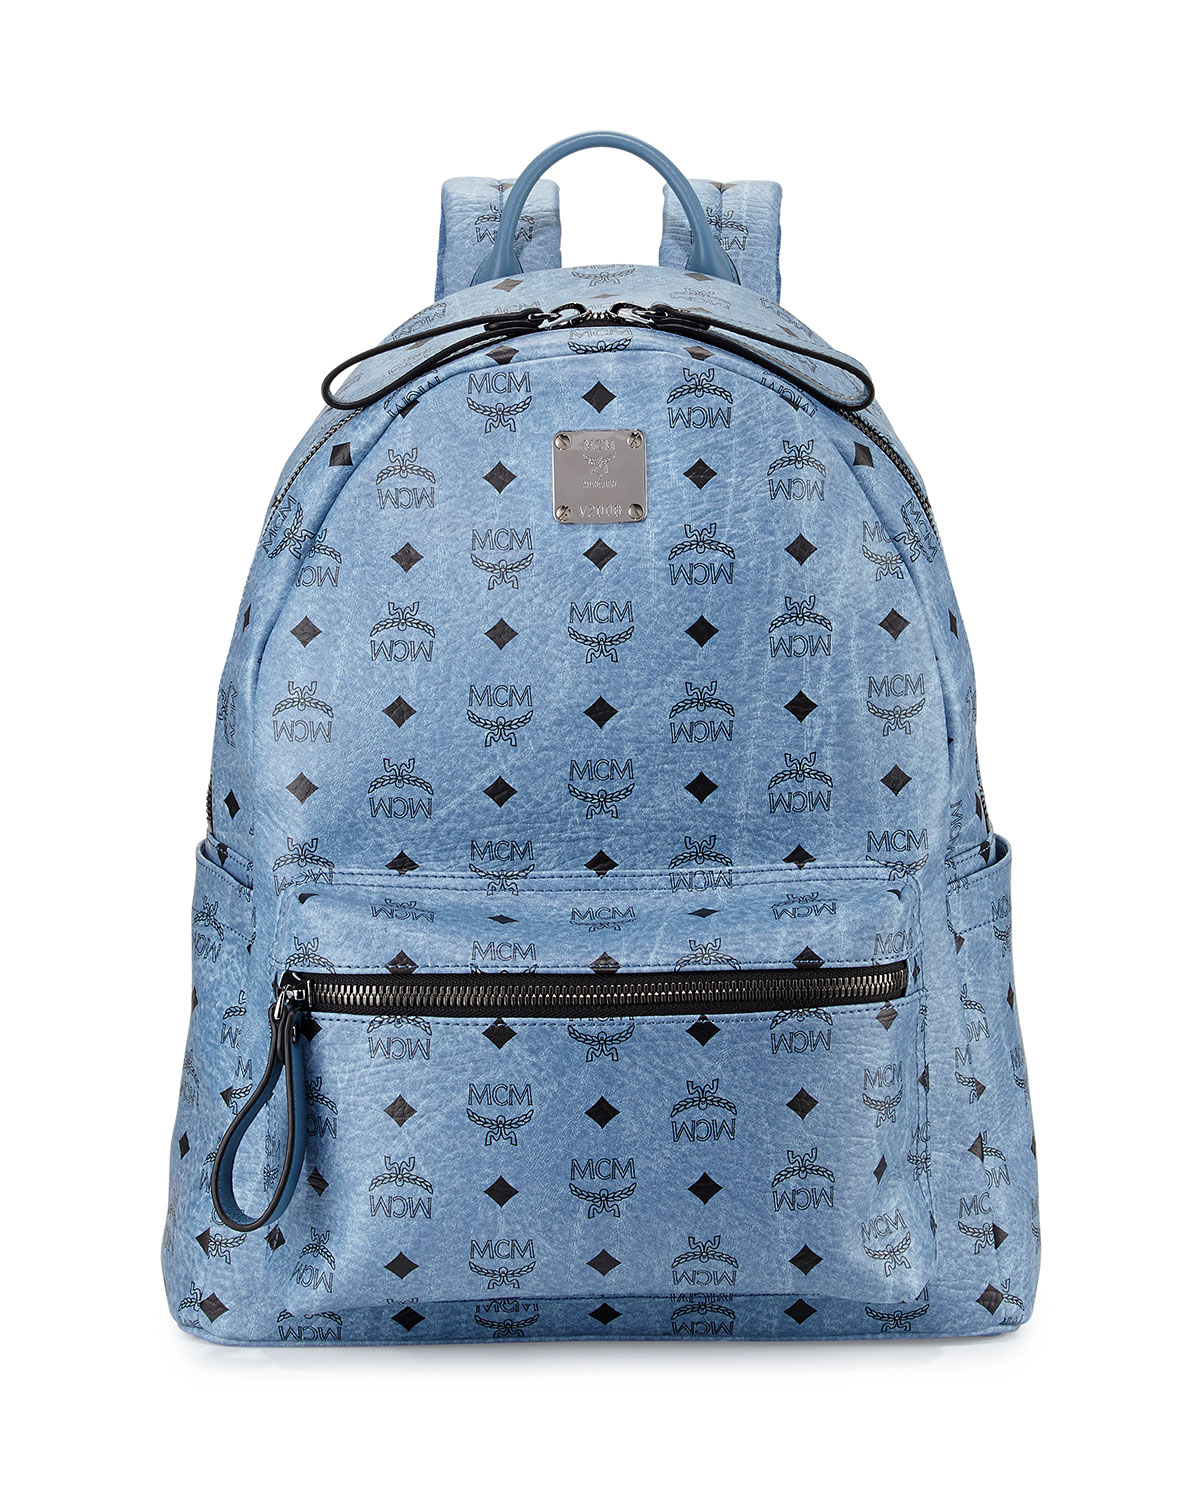 Lyst - Mcm Stark No Stud Medium Backpack in Blue for Men